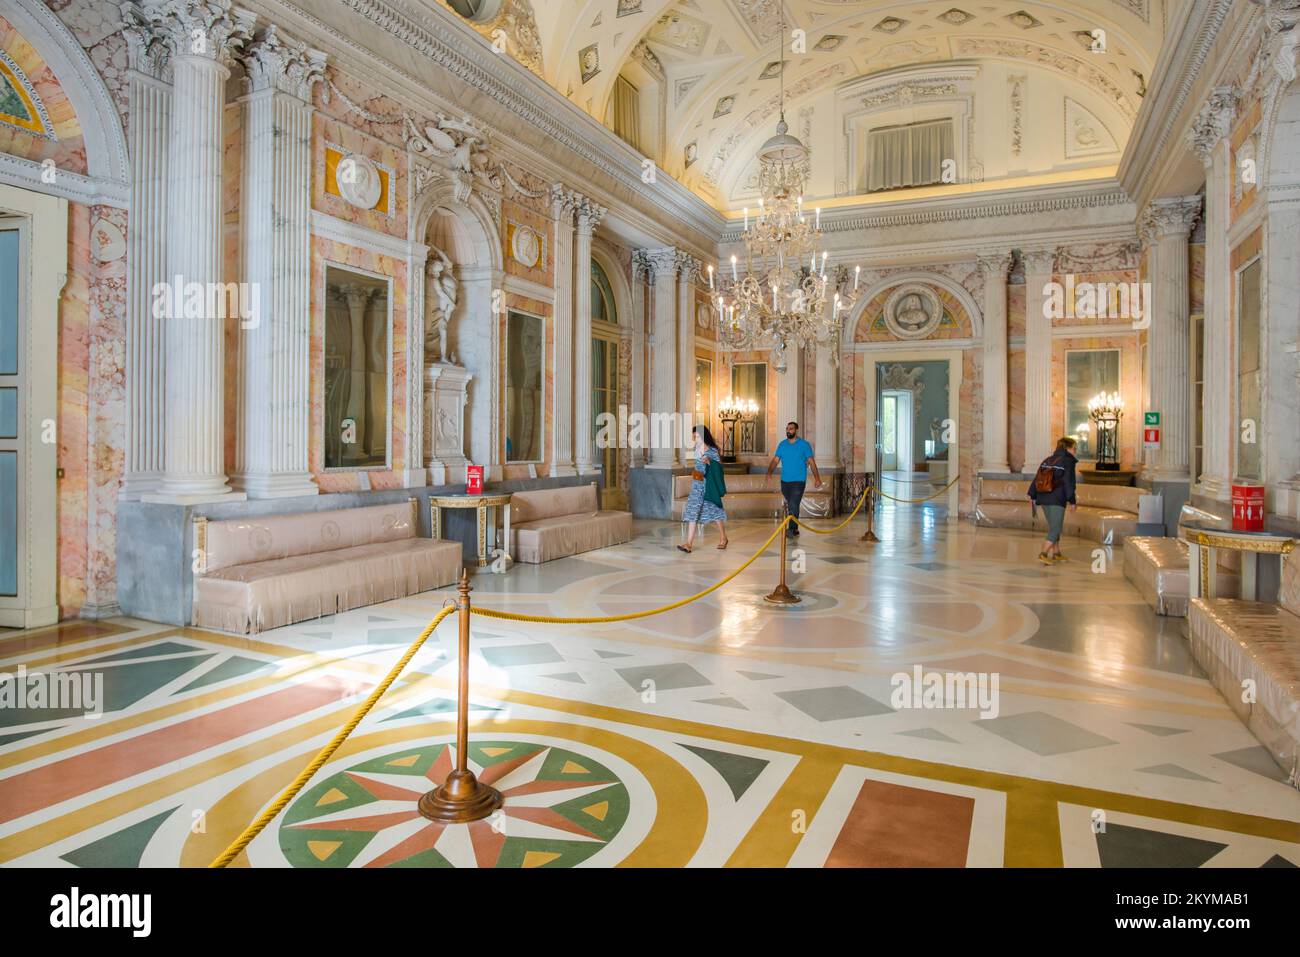 Palazzo Borromeo, view of the ornately decorated ballroom - the Sala da Ballo - inside the Palazzo Borromeo, Isola Bella, Piedmont, Italy Stock Photo